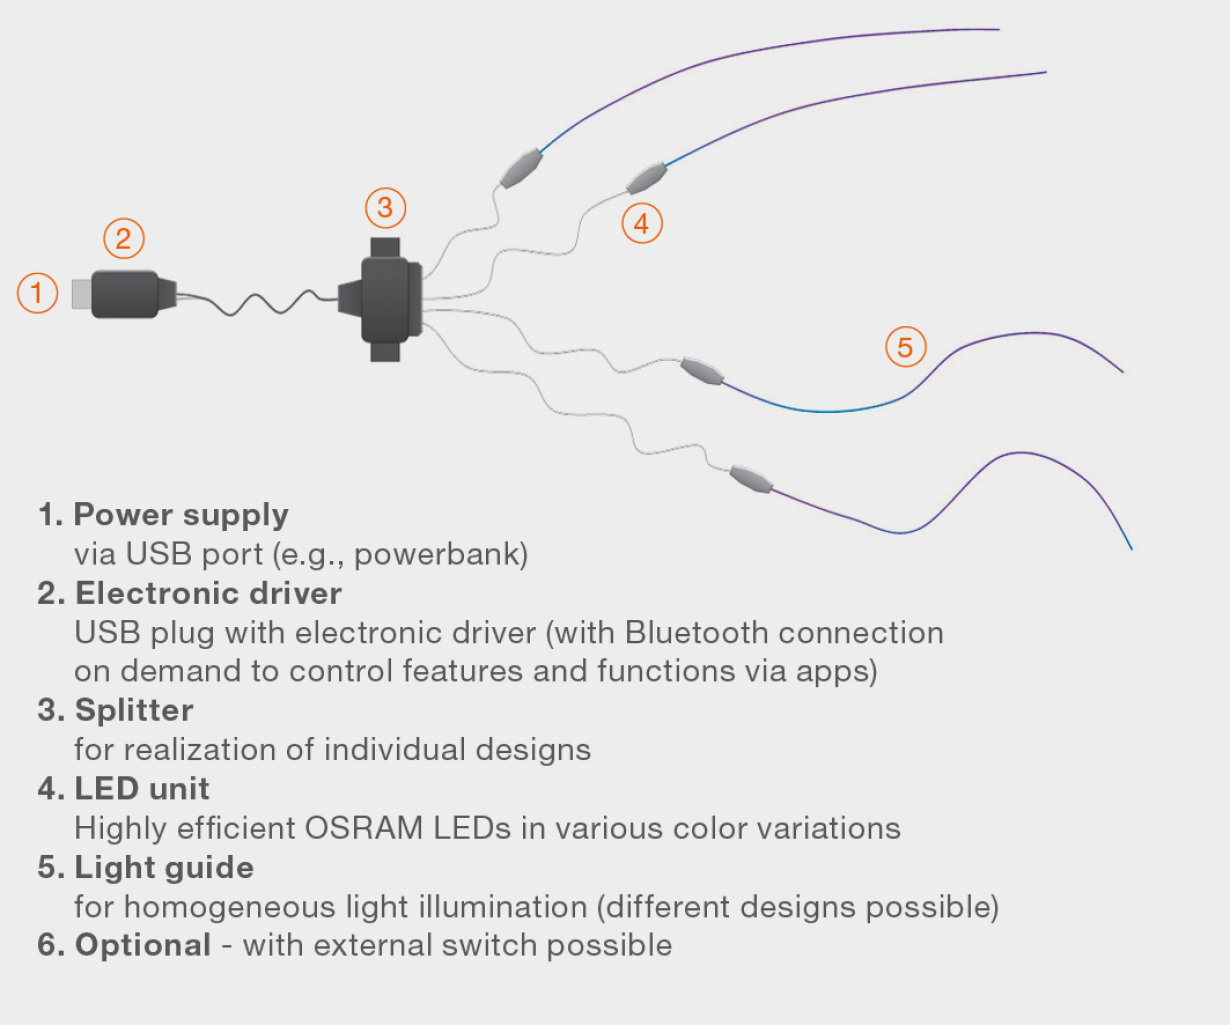 OSRAM LED light module for textile illumination